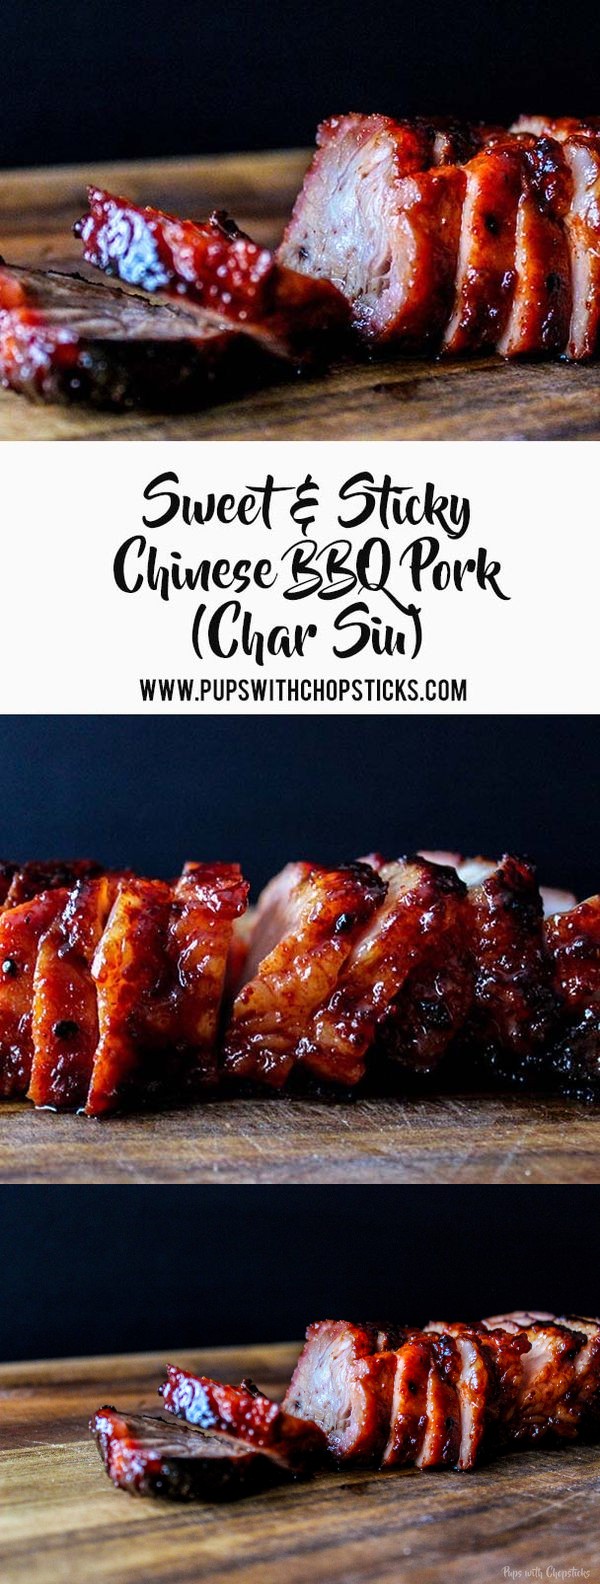 Sweet & Sticky Chinese BBQ Pork (Char Siu